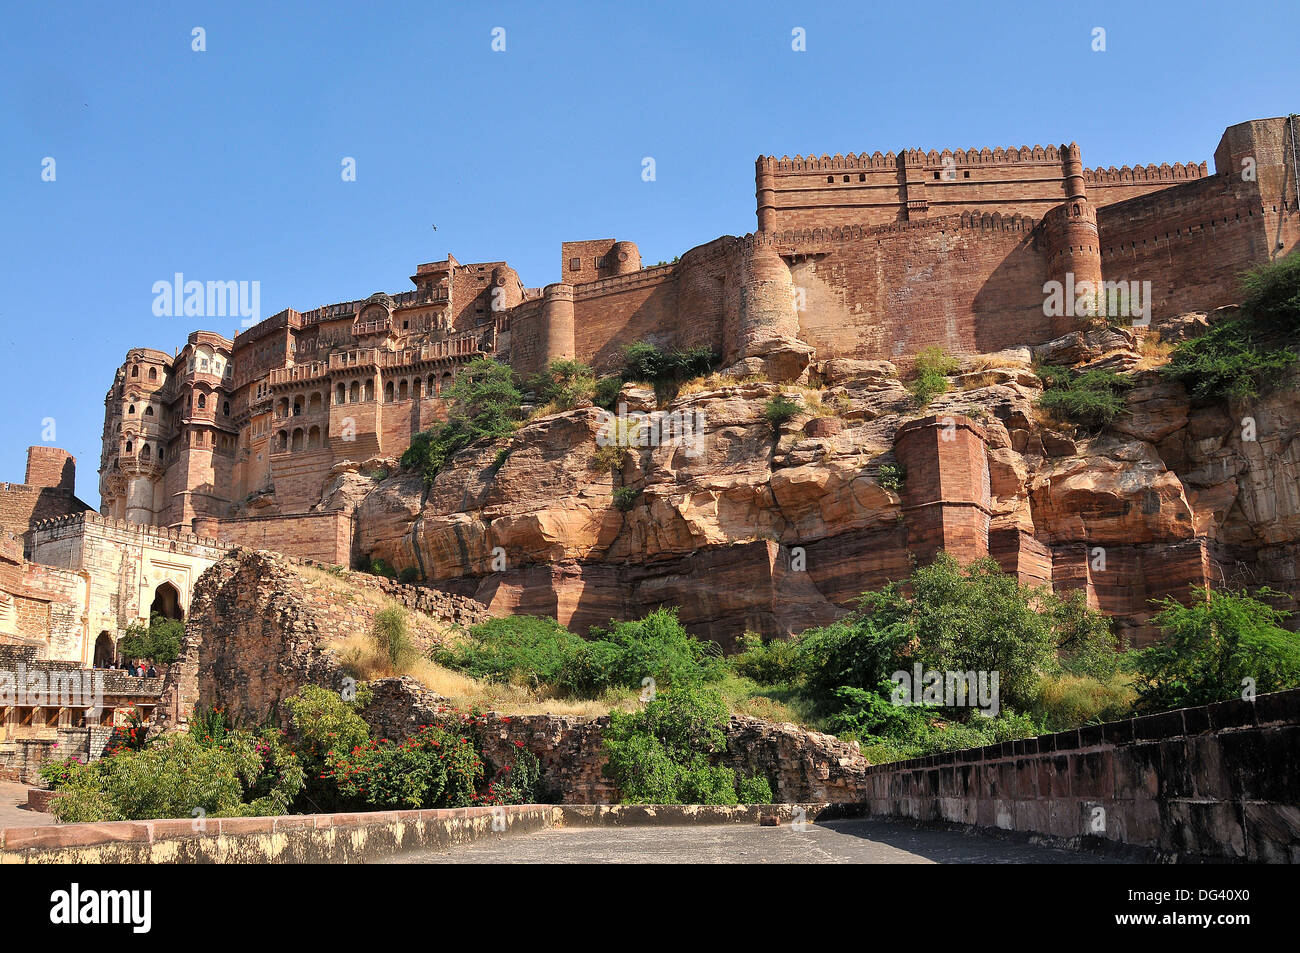 La Mehrangarh Fort de Jodhpur, Rajasthan, Inde, Asie Banque D'Images